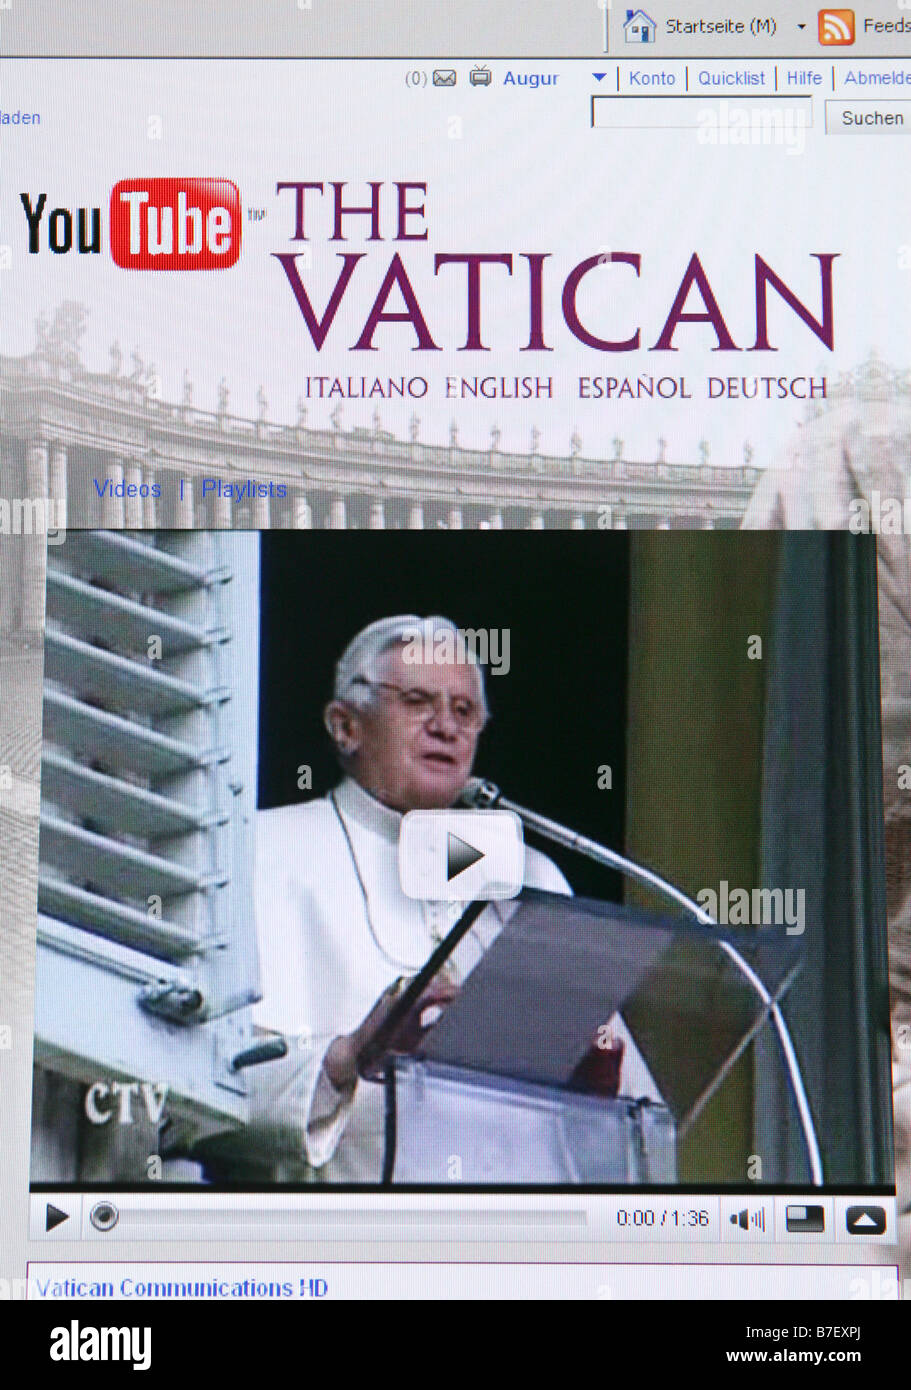 Captura de pantalla de la plataforma de internet Vaticano en youtube muestra el Papa Benedikt XVI. Foto de stock